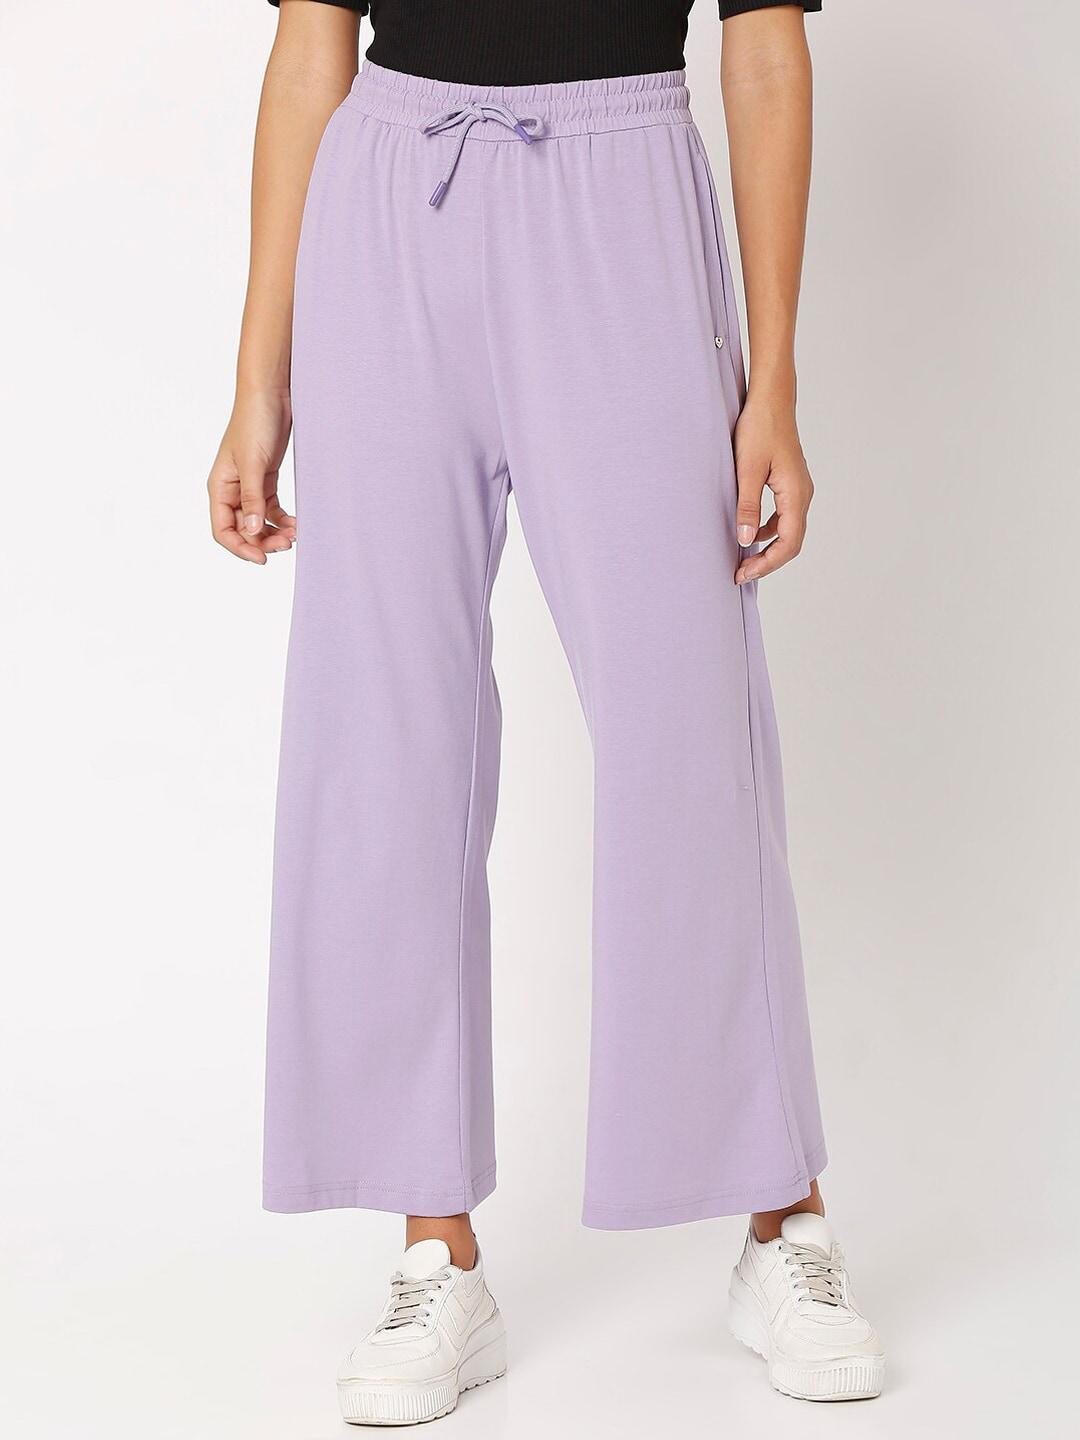 spykar women purple solid mid rise ribbed lounge pants